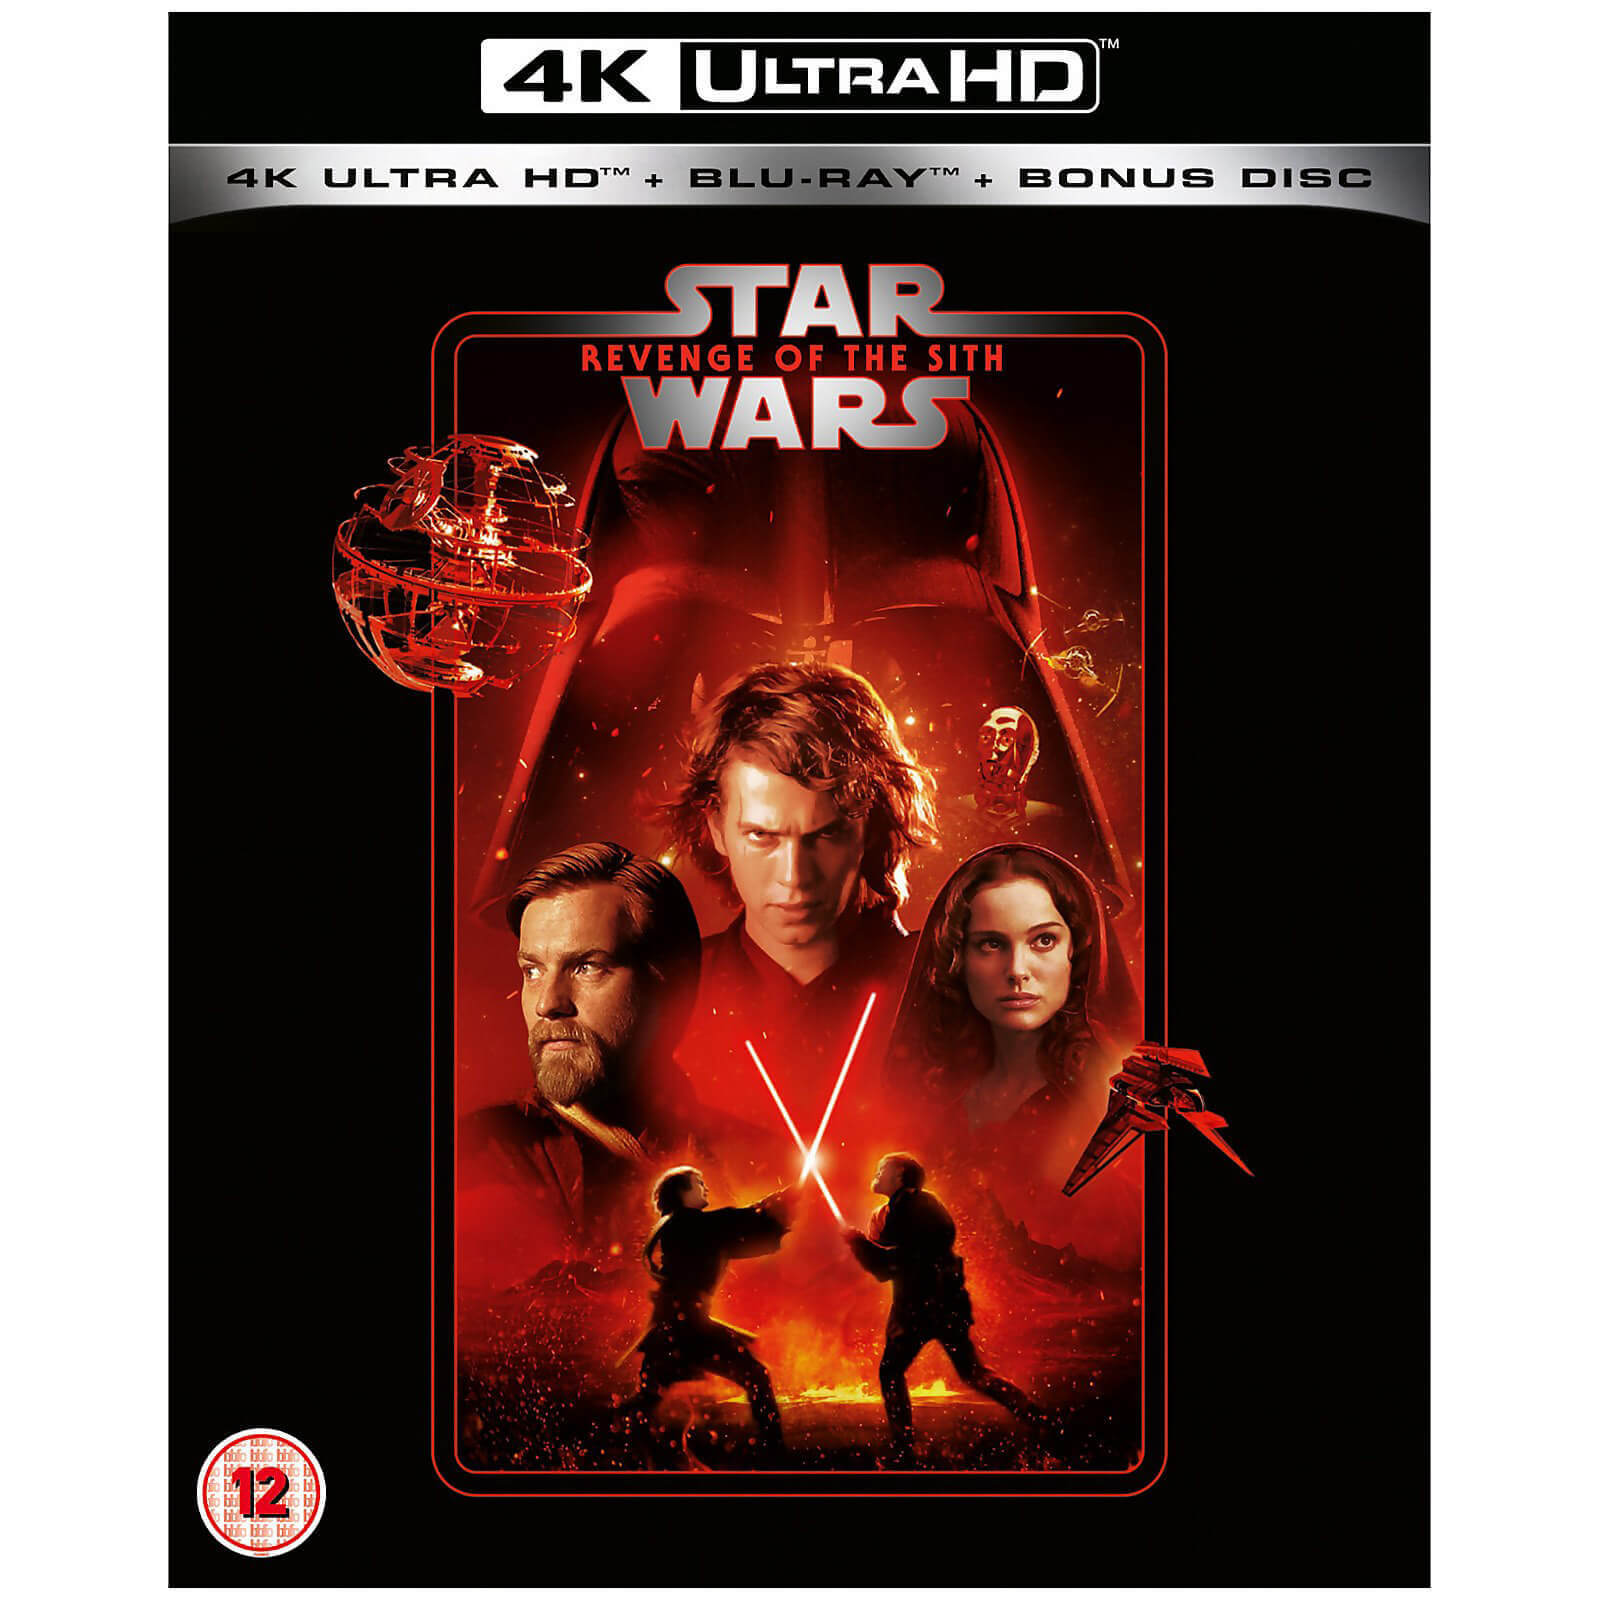 Star Wars - Episode III - Revenge of the Sith - 4K Ultra HD (Inclusief 2D Blu-ray)